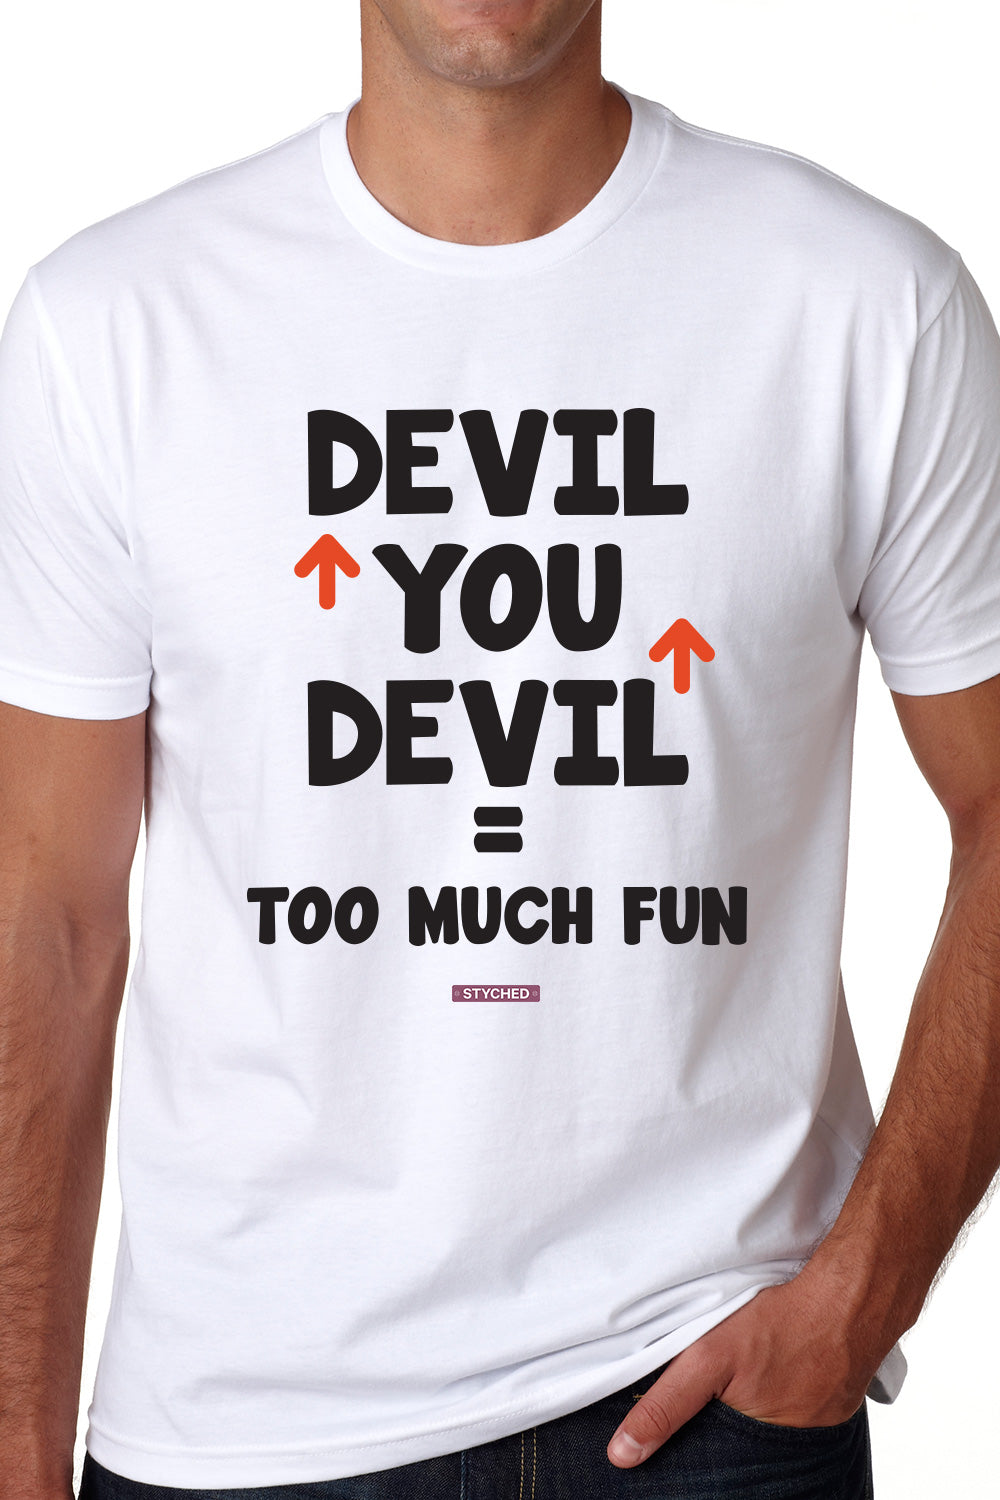 Aap Devil ke Peeche, Devil Aap ke Peeche, Too much Fun - Quirky Graphic T-Shirt White Color